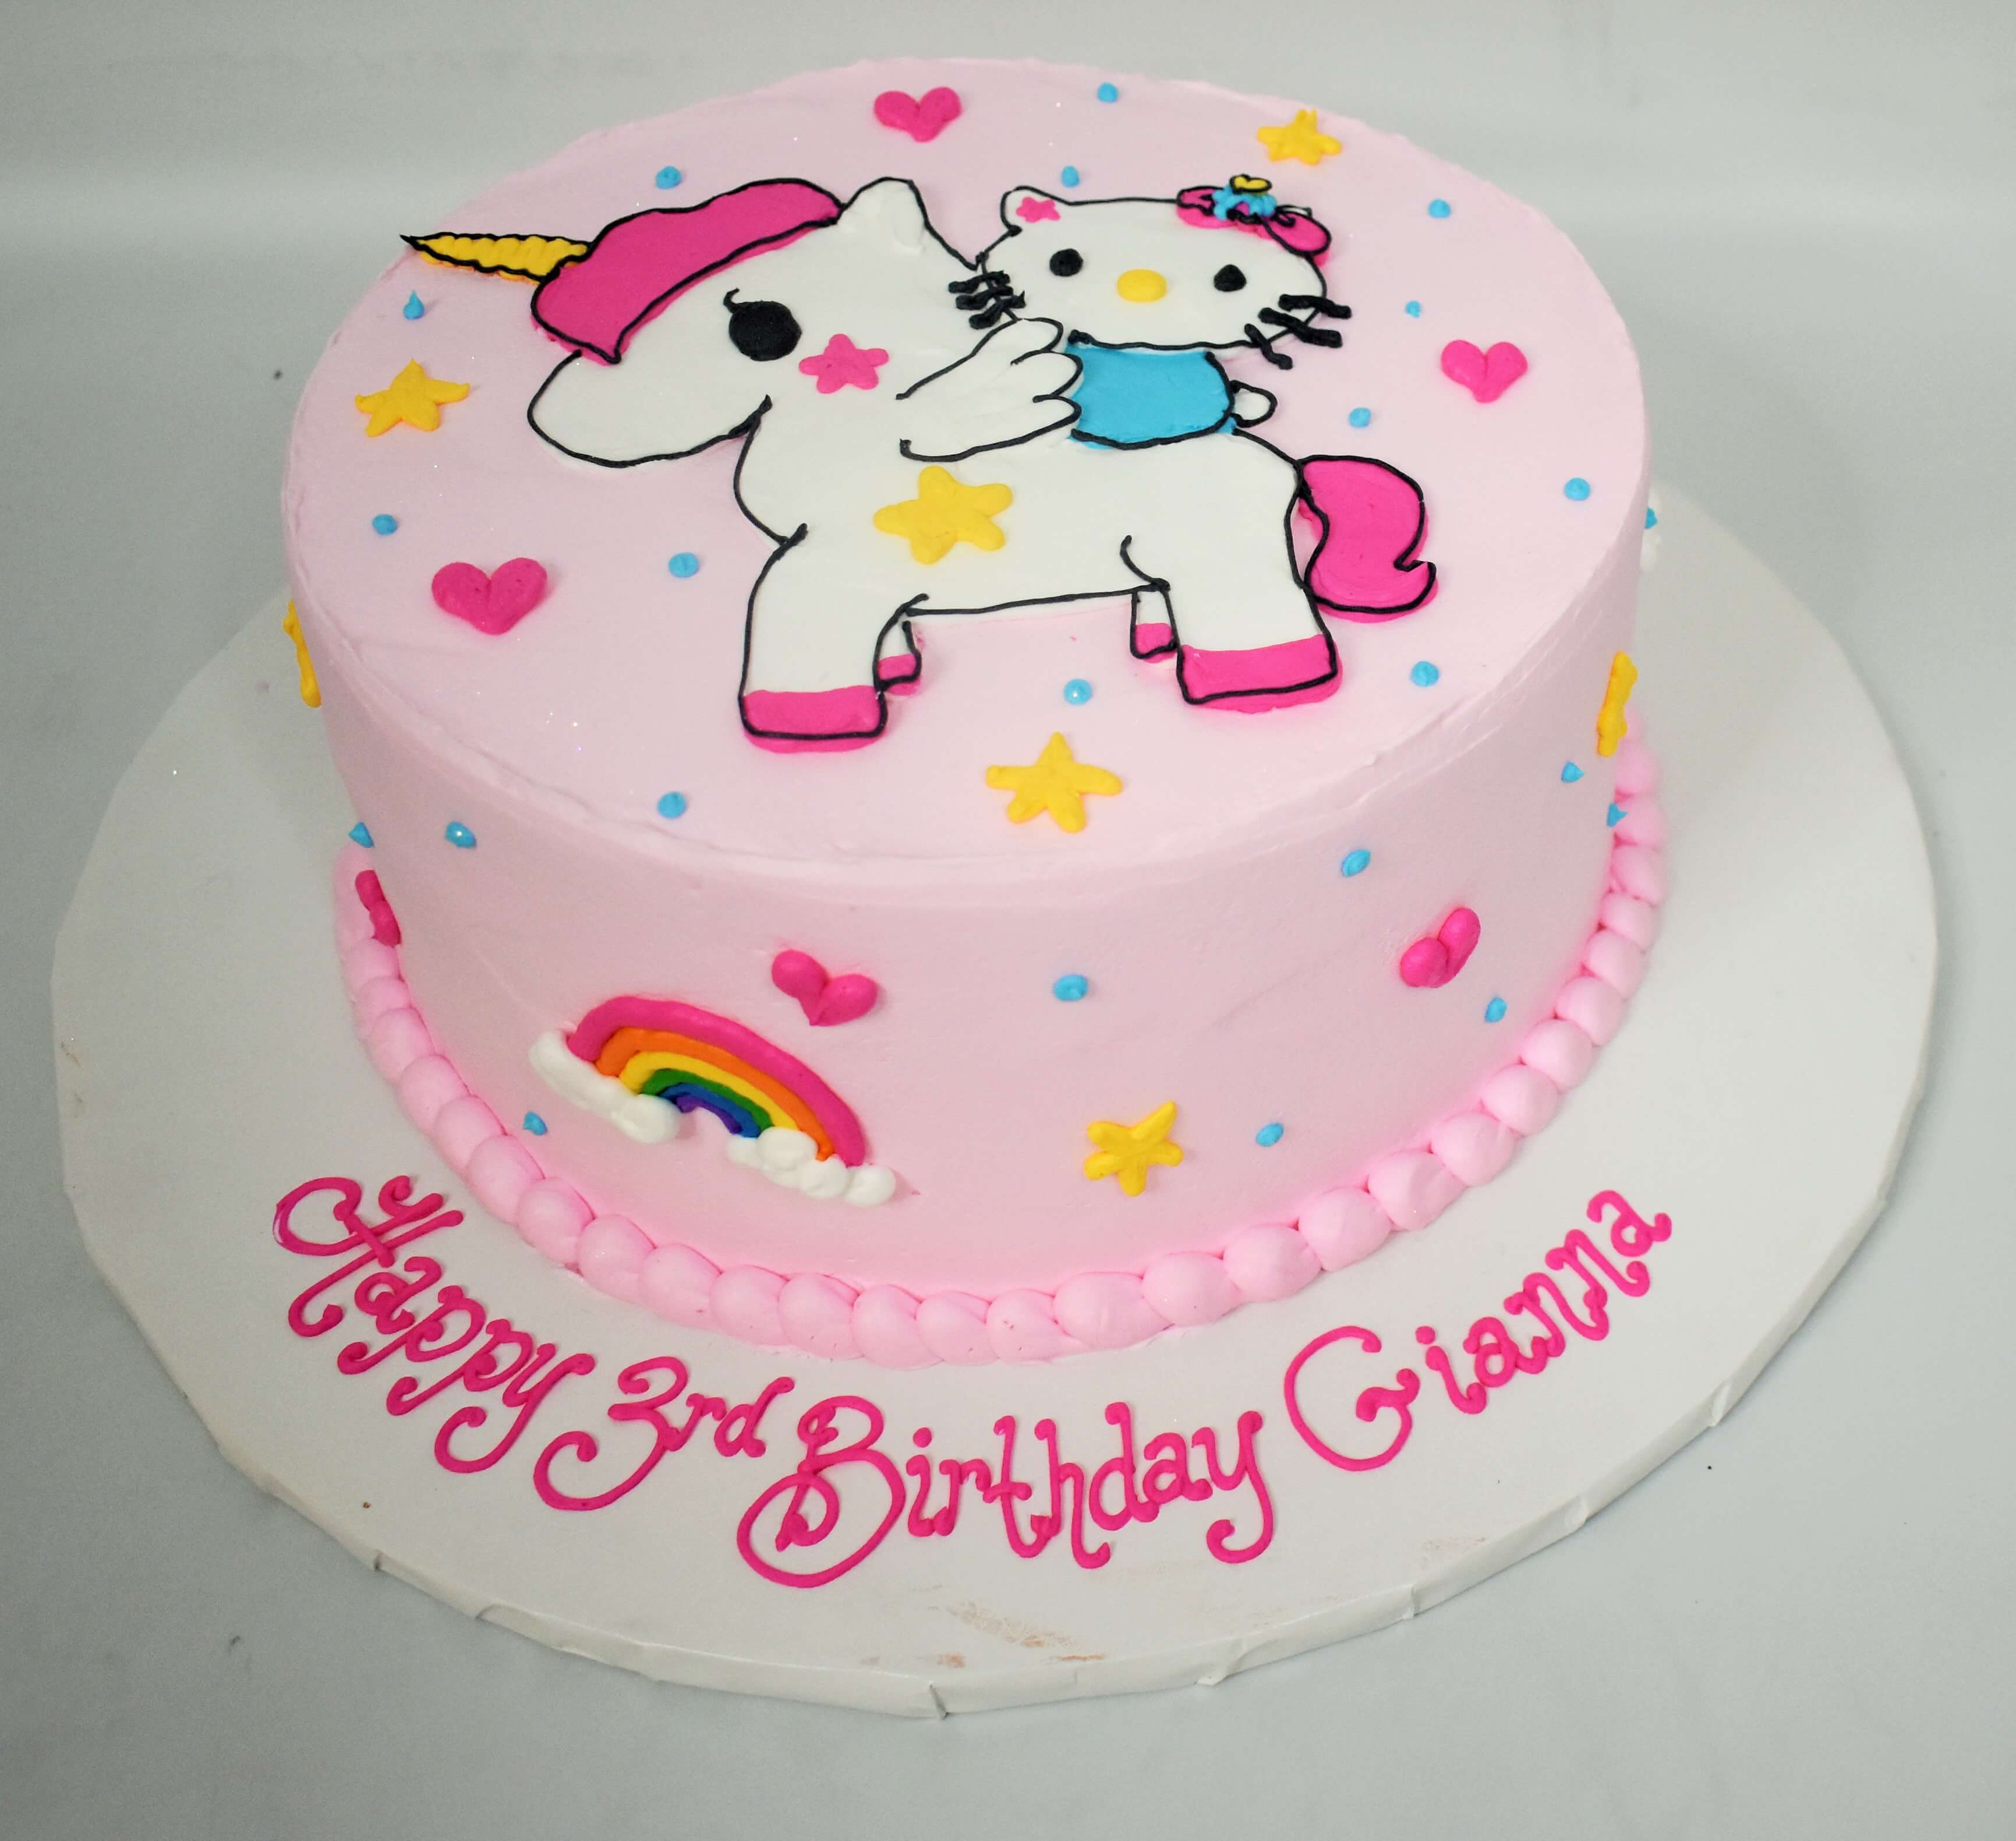 McArthur's Bakery Custom Cake with Hello Kitty, Unicorn, Rainbows, Hearts